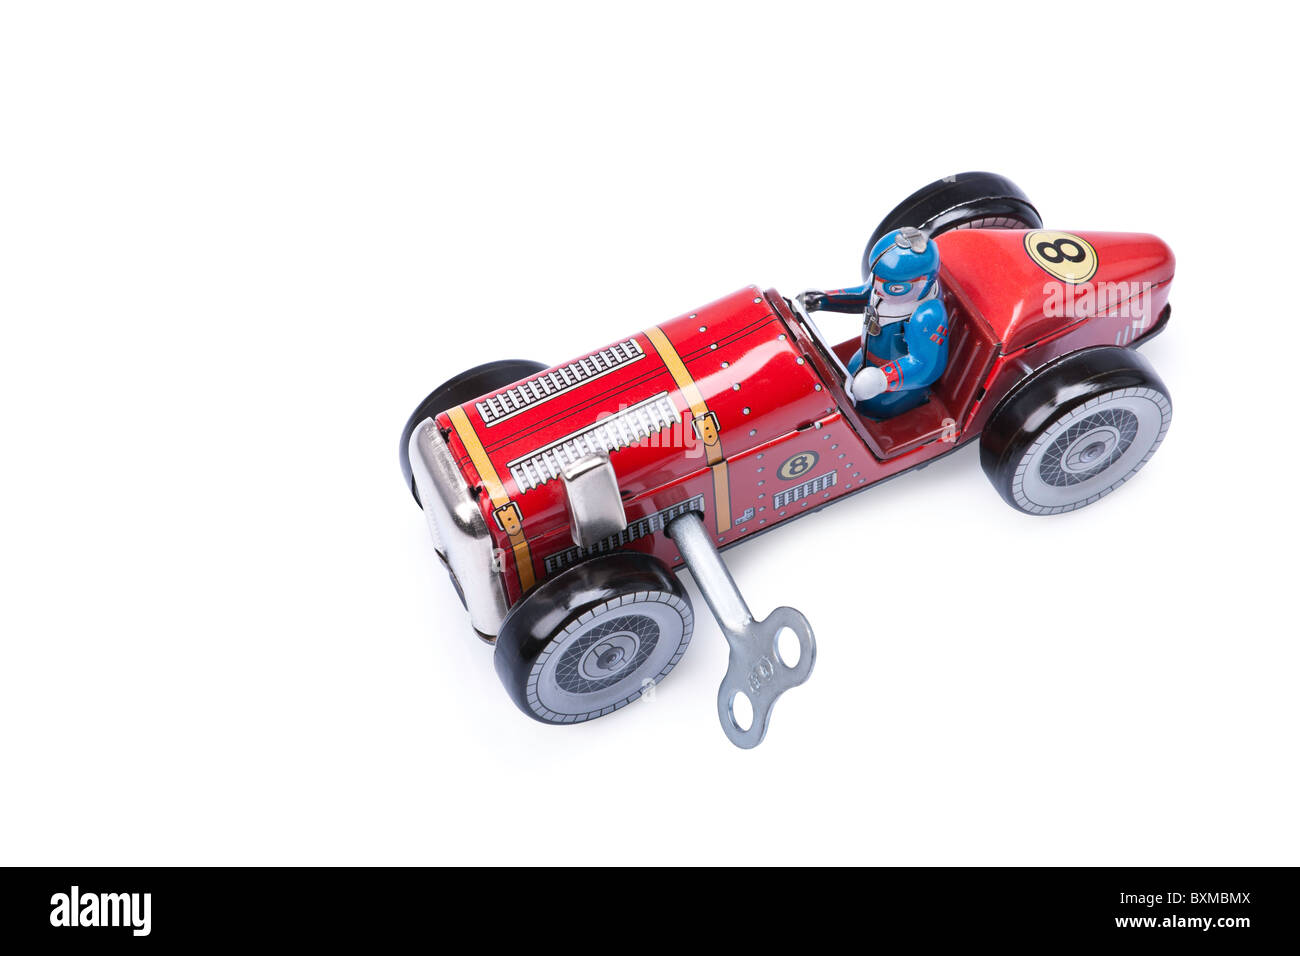 Clockwork toy car Stock Photo